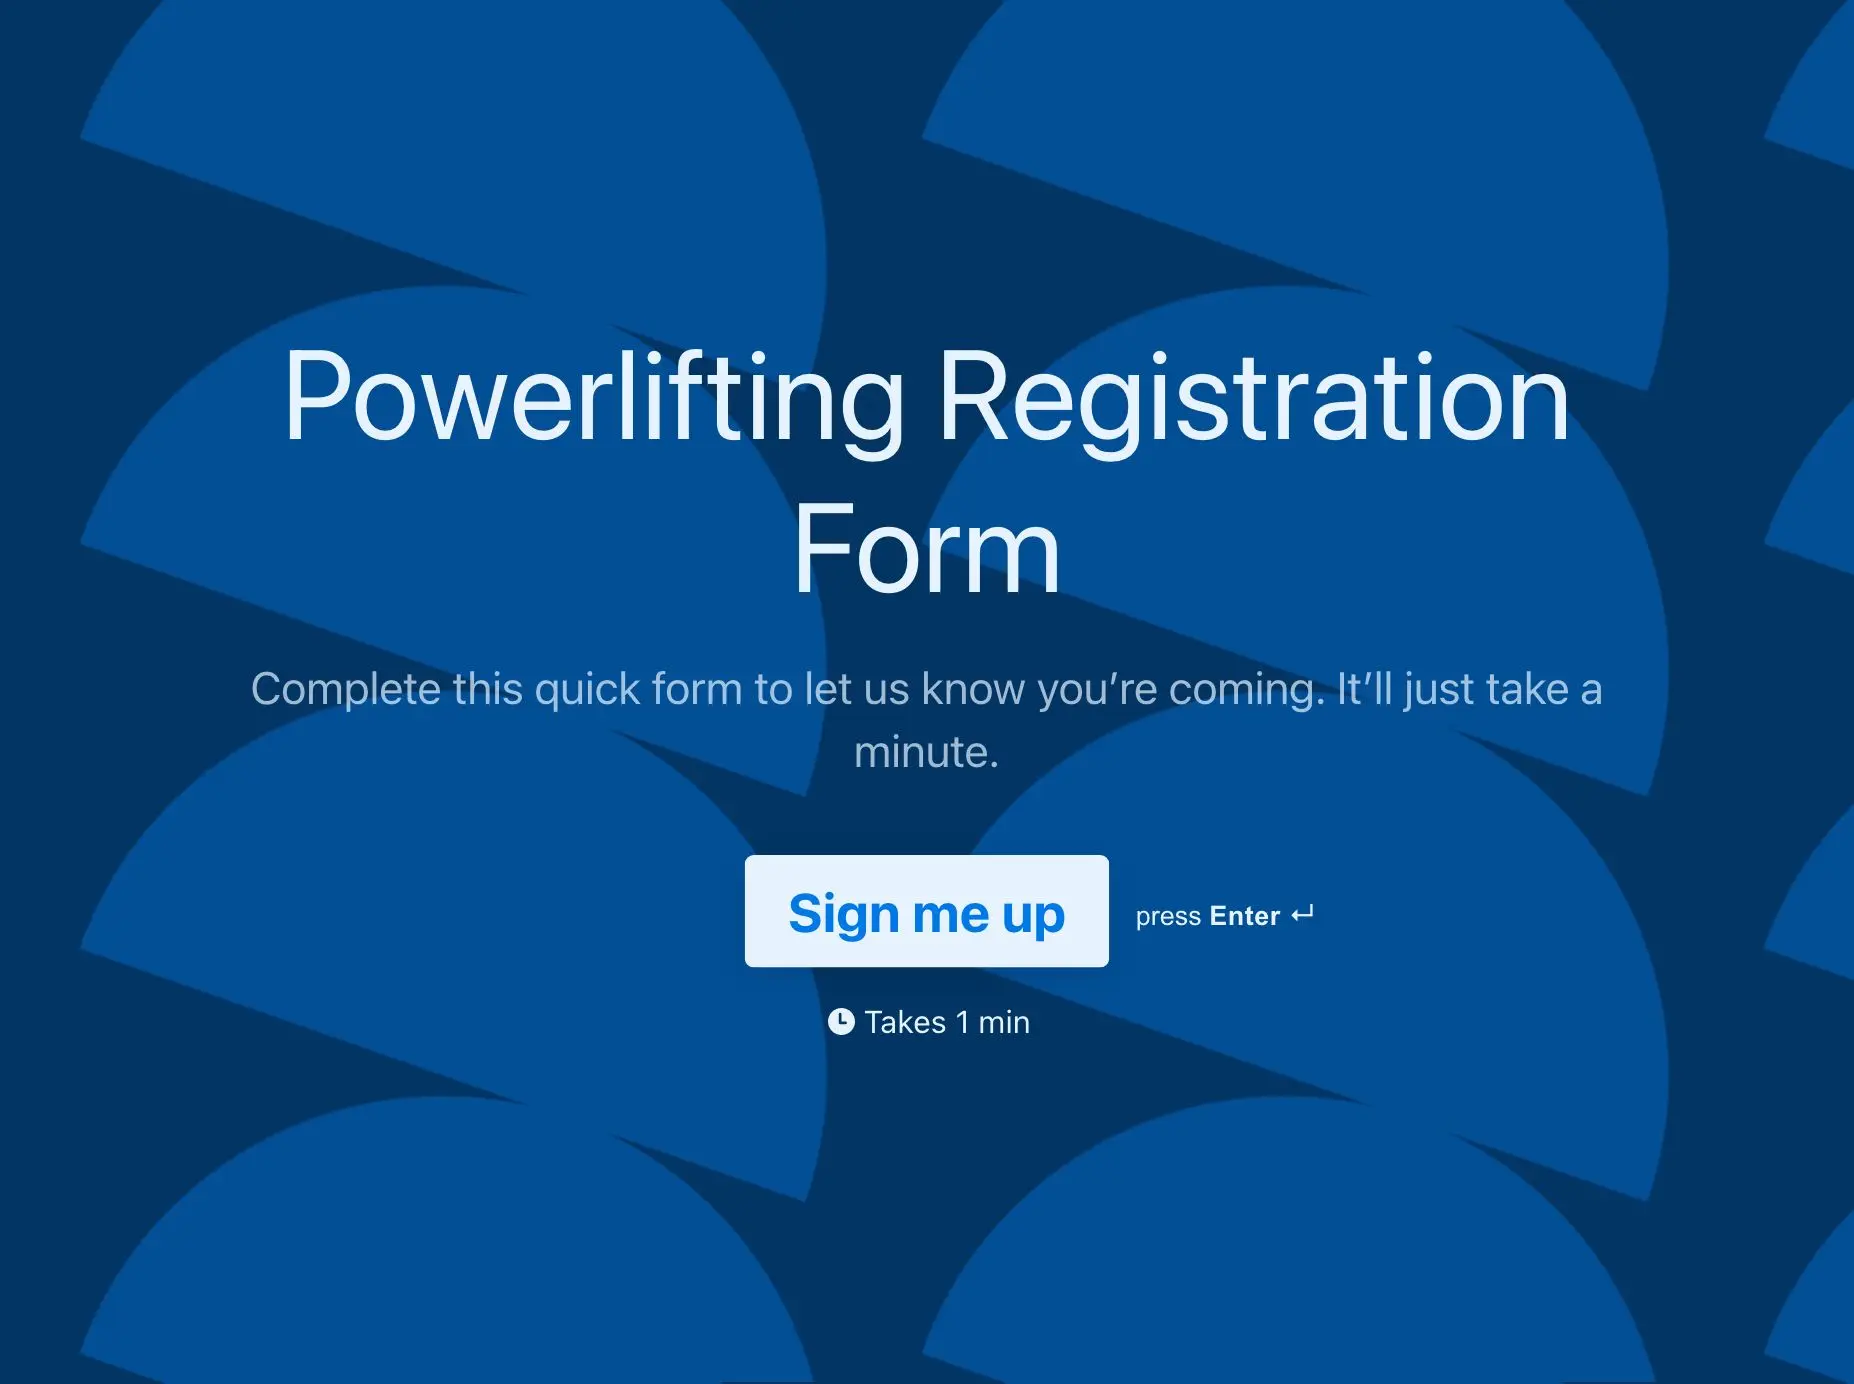 Powerlifting Registration Form Template Hero